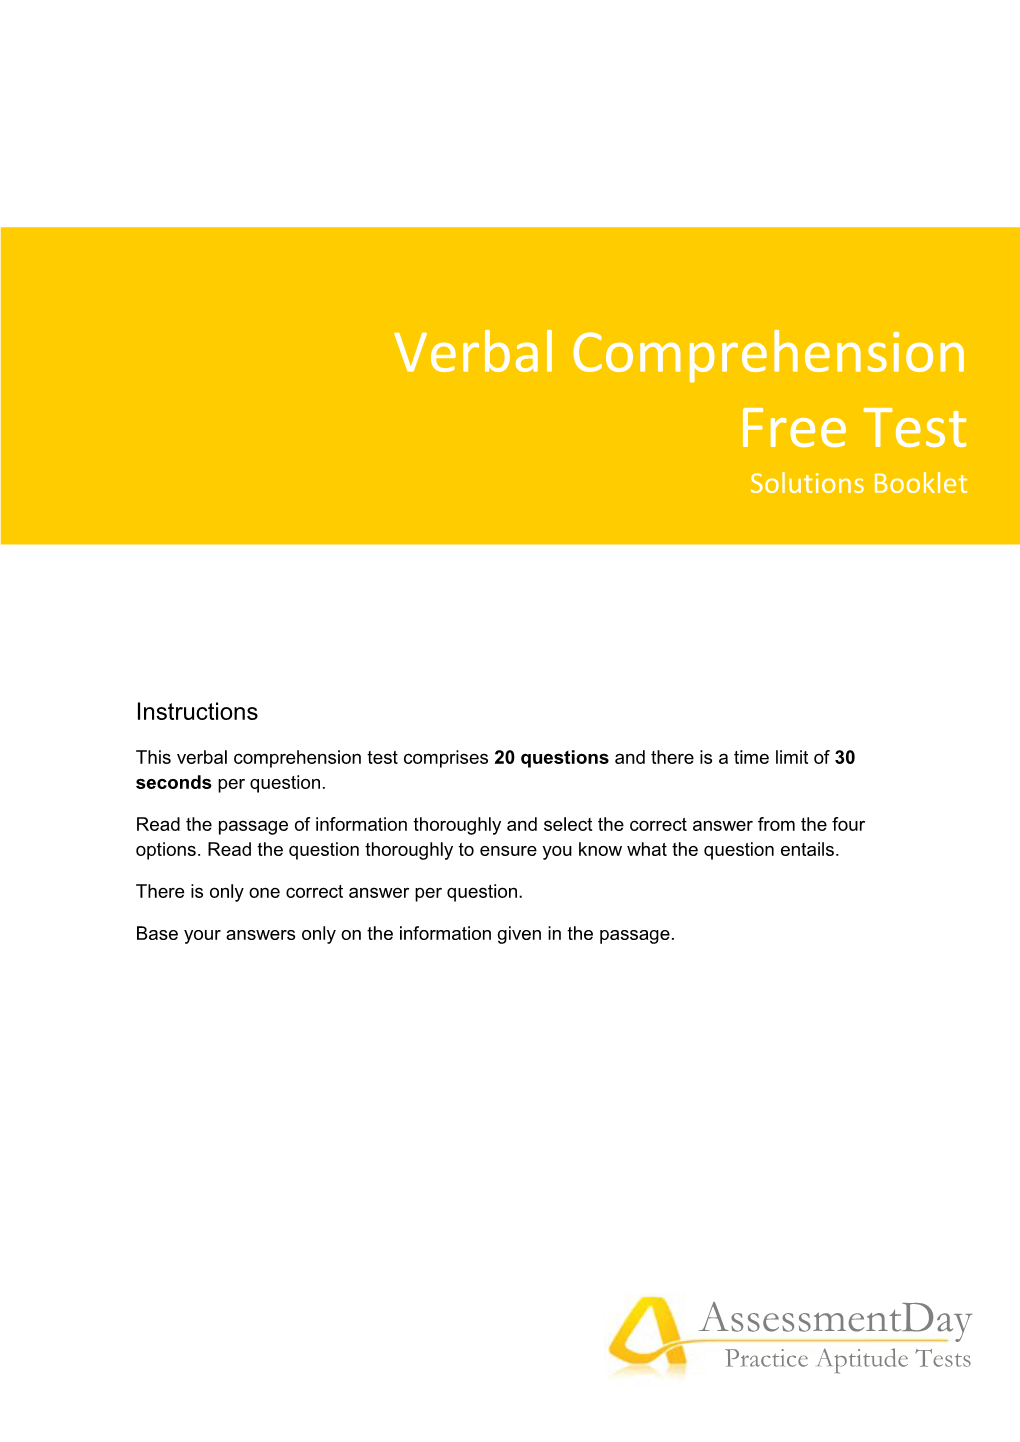 Verbal Comprehension Free Test Solutions Booklet